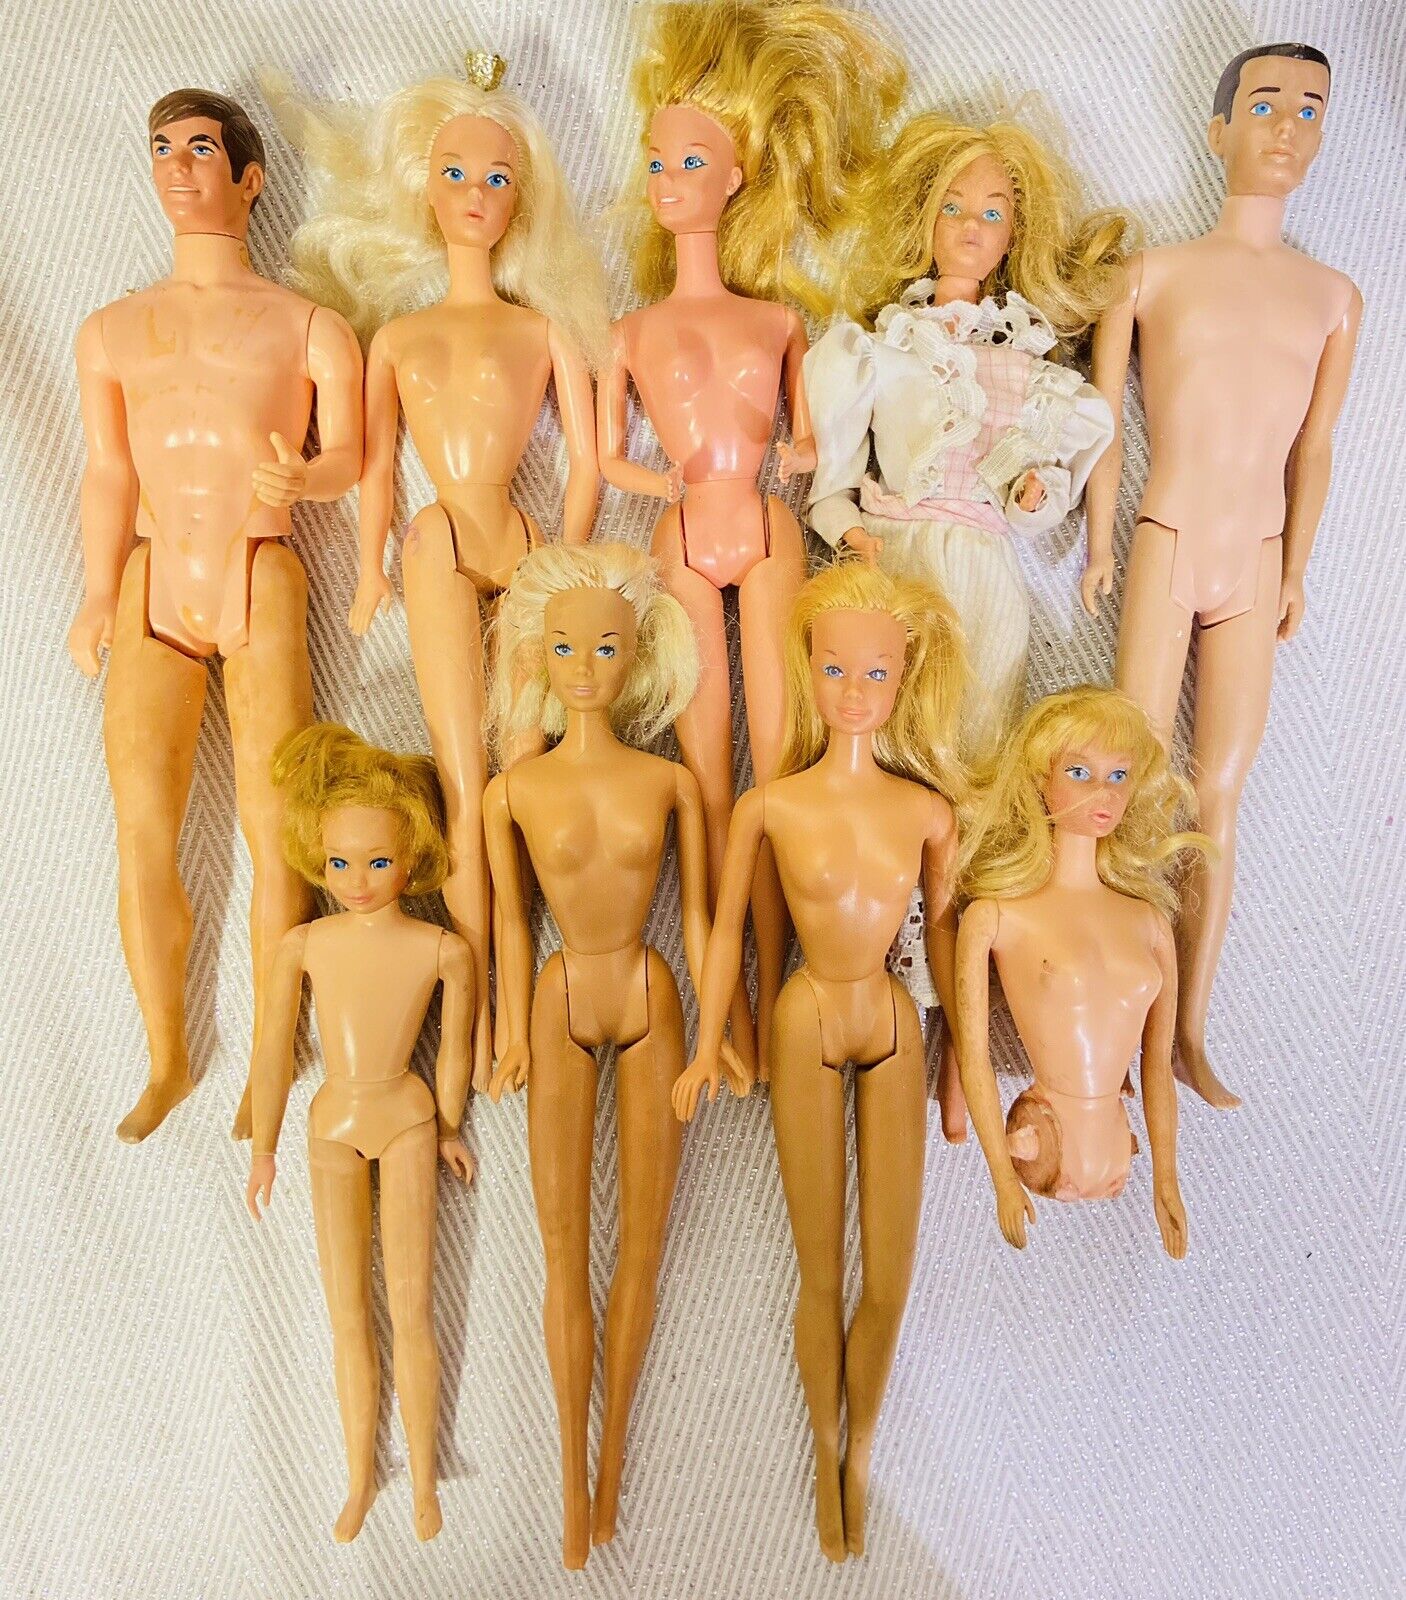 Assortment Of 9 Barbie dolls From 1960- 1970’s Era Blonde Hair Barbie Nude OOAK